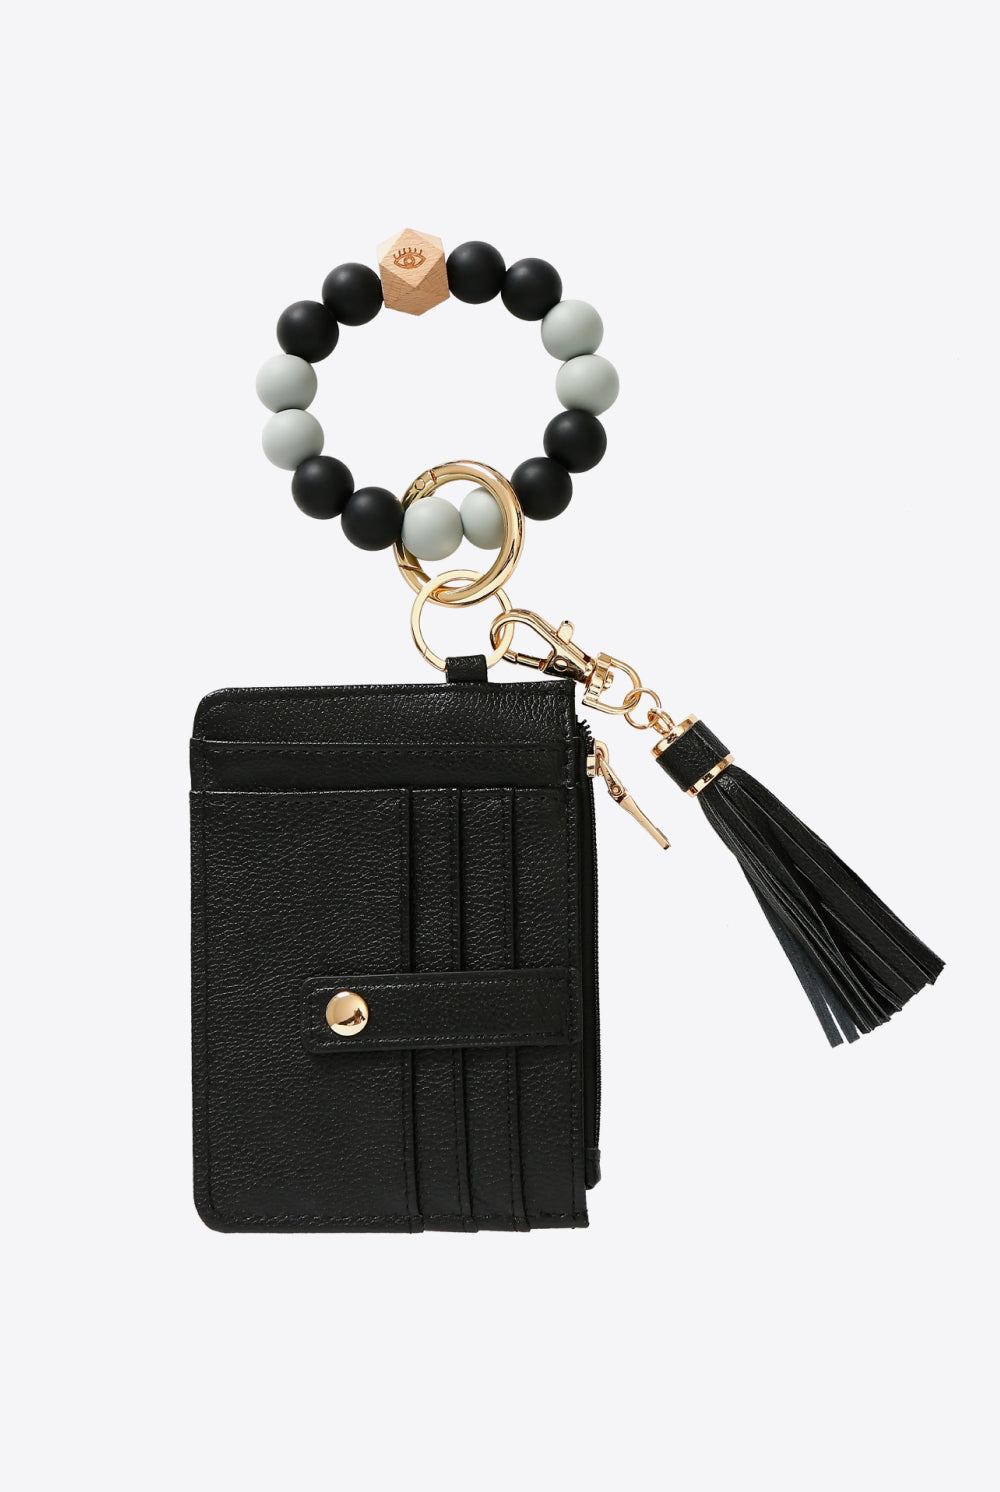 Beaded Bracelet Keychain with Wallet - GemThreads Boutique Home & Decor Home & Decor Beaded Bracelet Keychain with Wallet